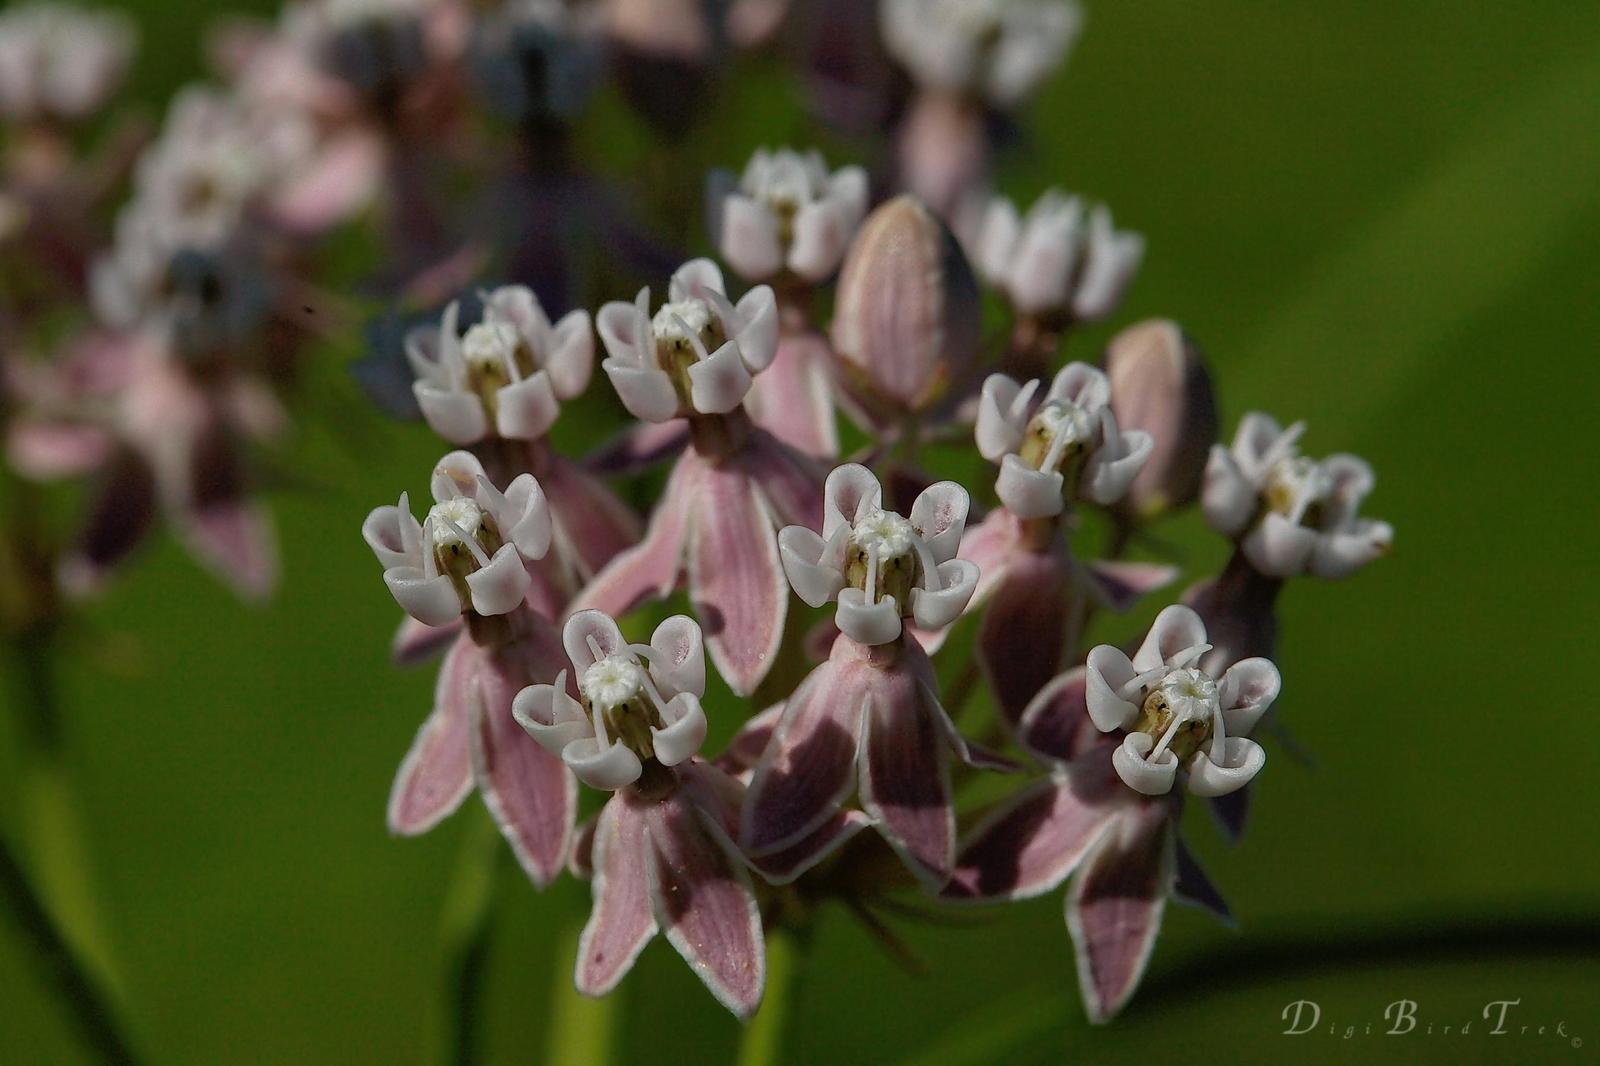 Narrow-leaved milkweed Photo by Digibirdtrek CA